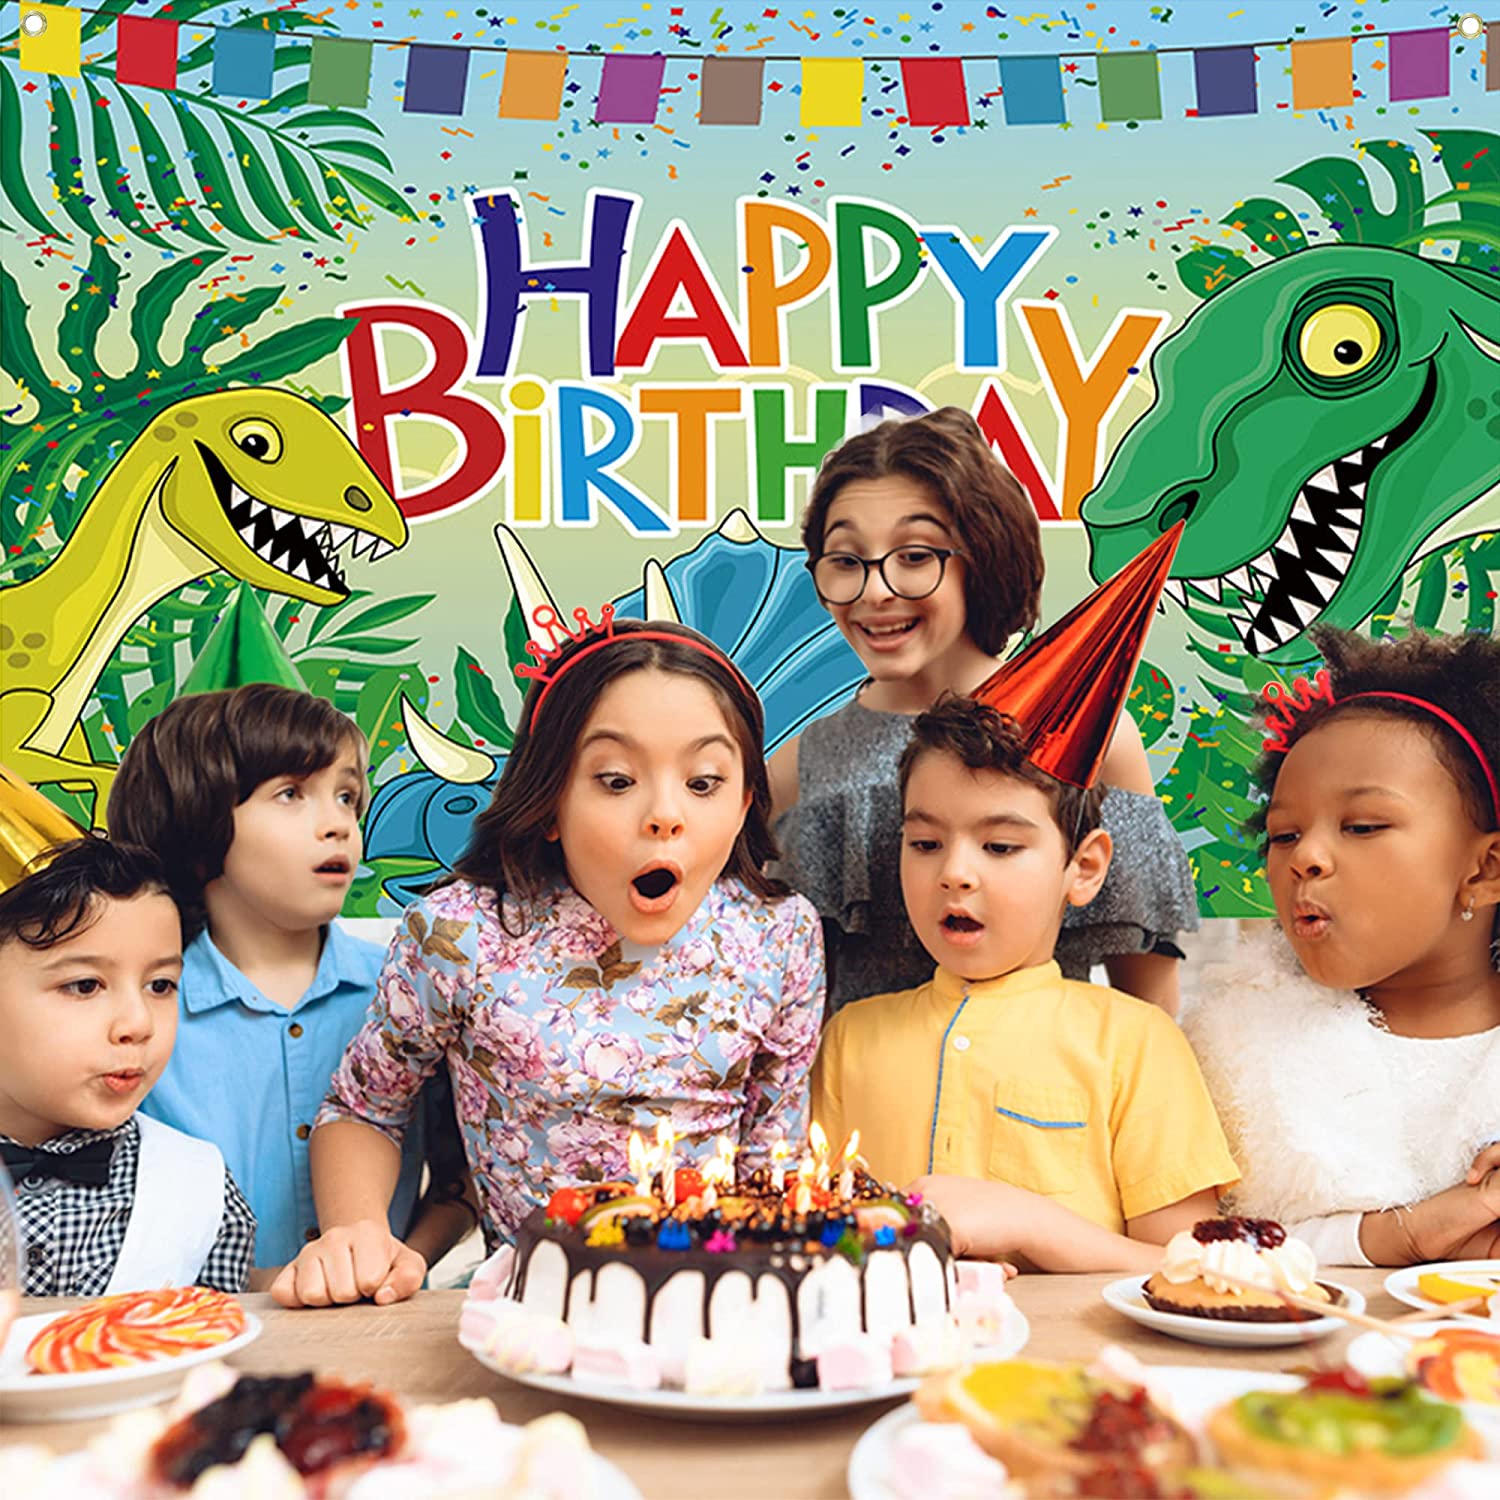 Birthday background poster with dinosaur design